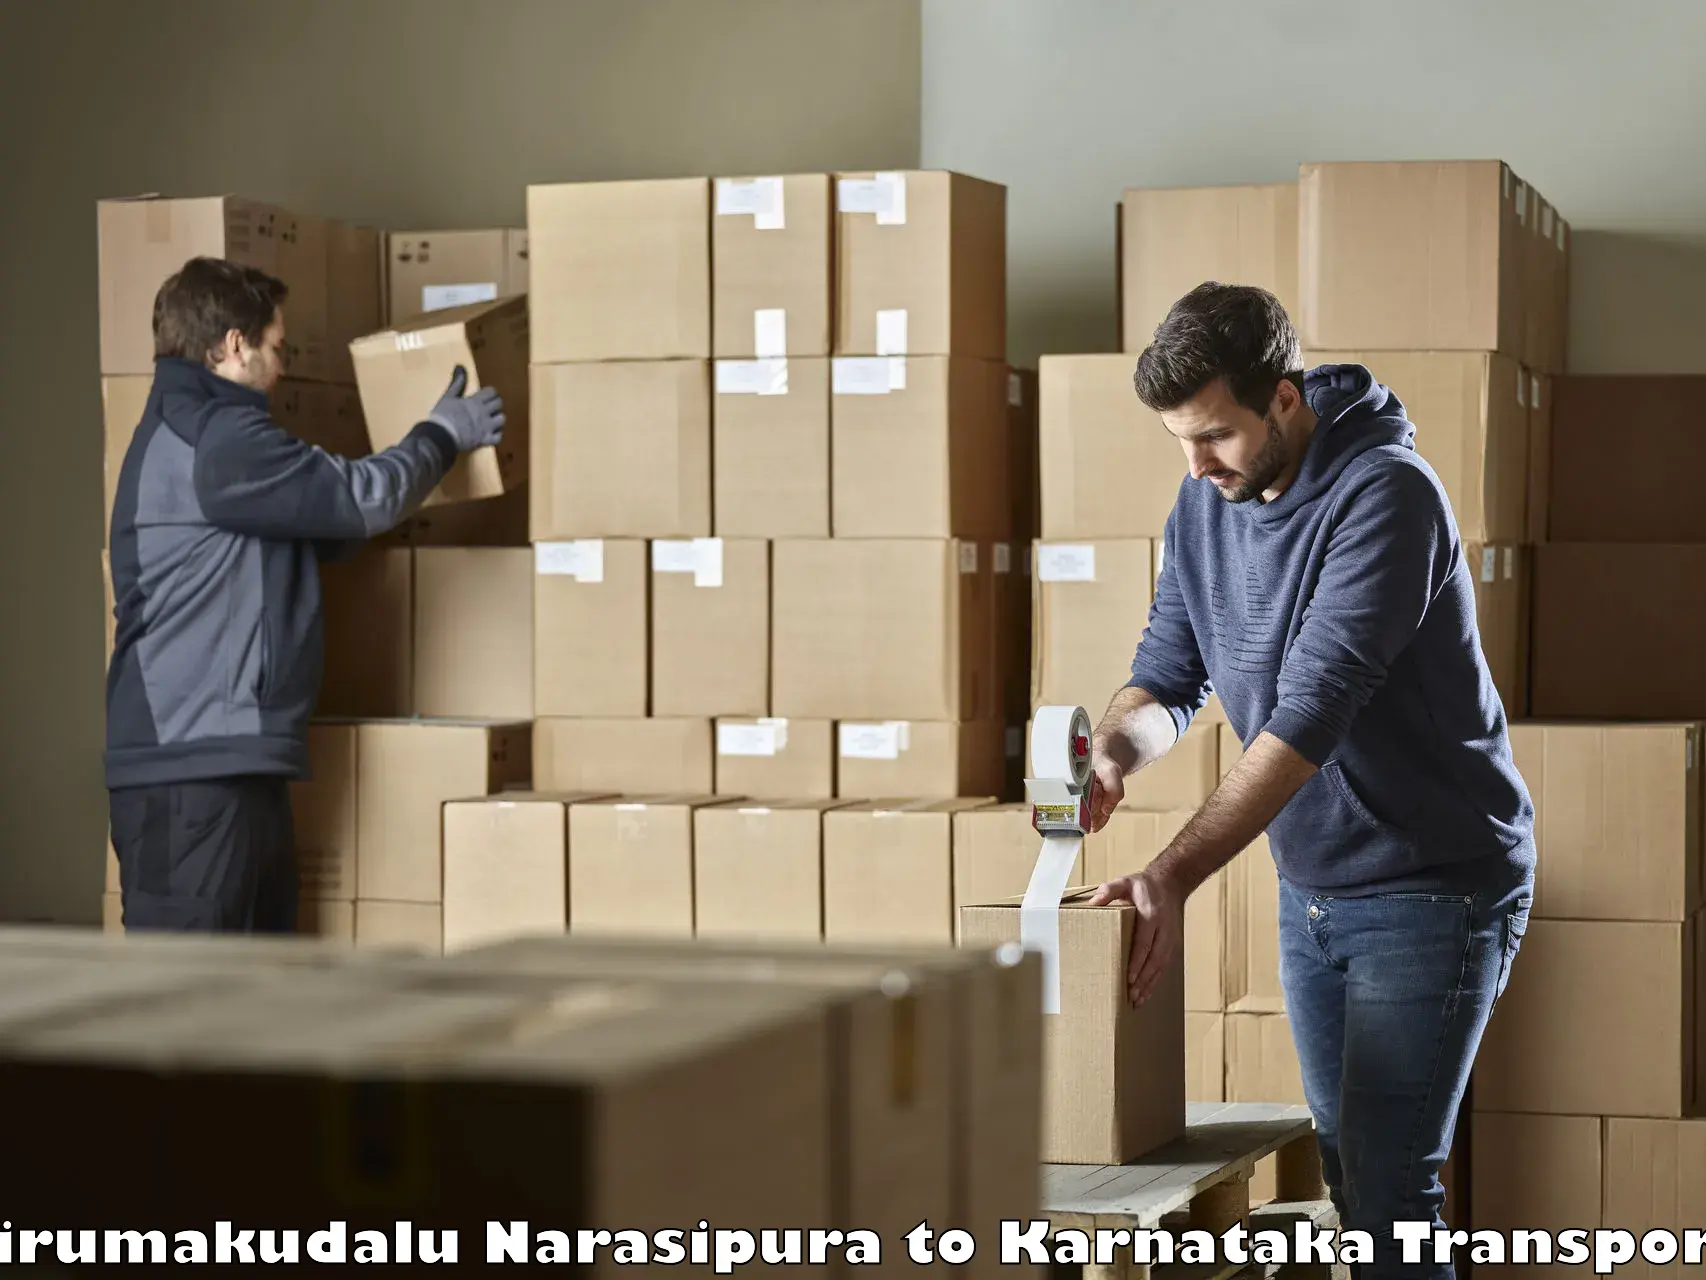 Furniture transport service Tirumakudalu Narasipura to Kurugodu